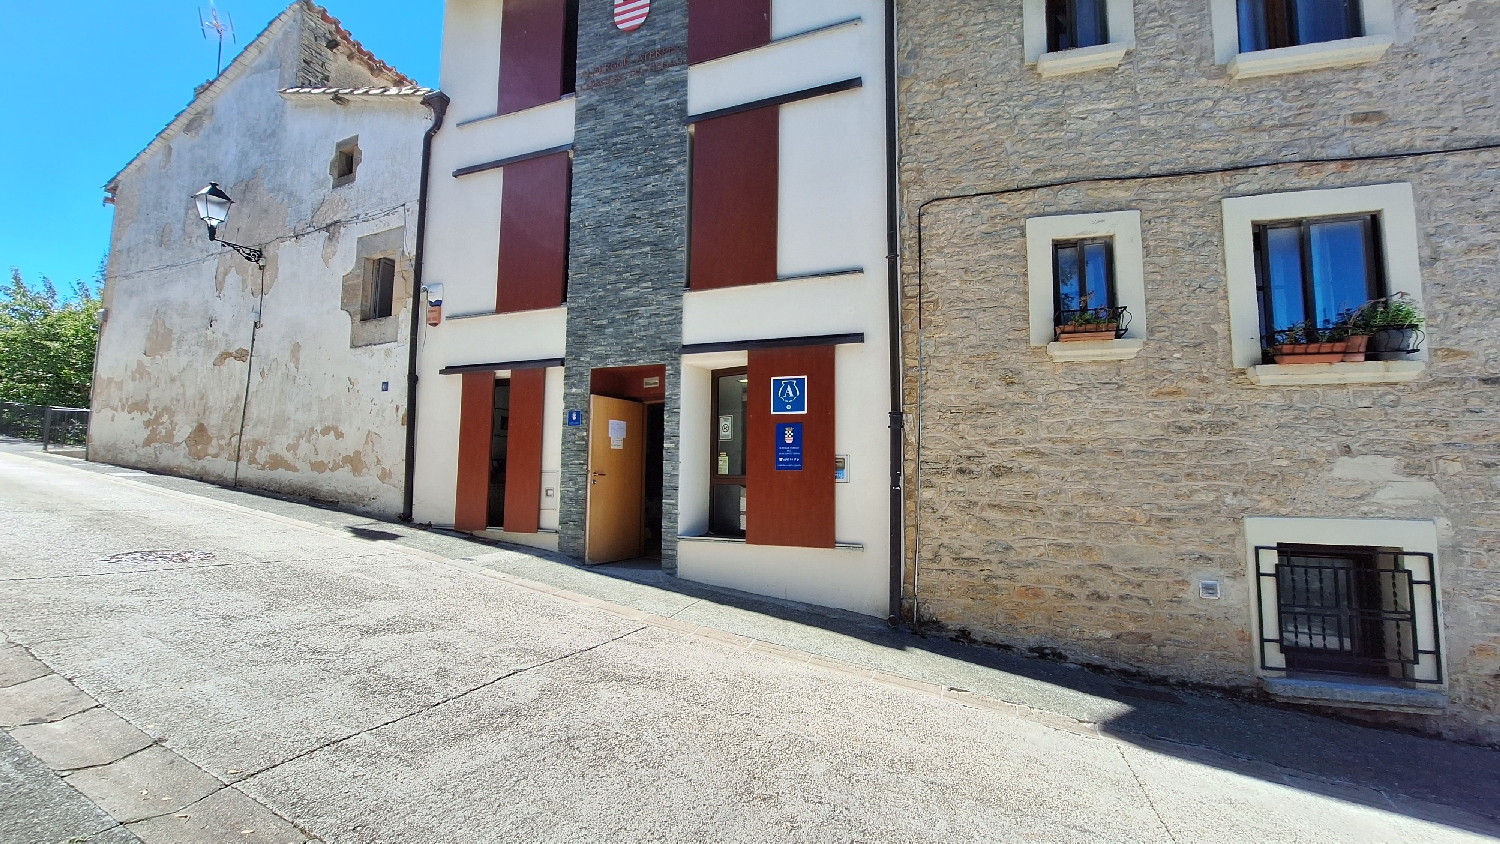 El Camino, Aragon út, Tiebas, az albergue bejárata